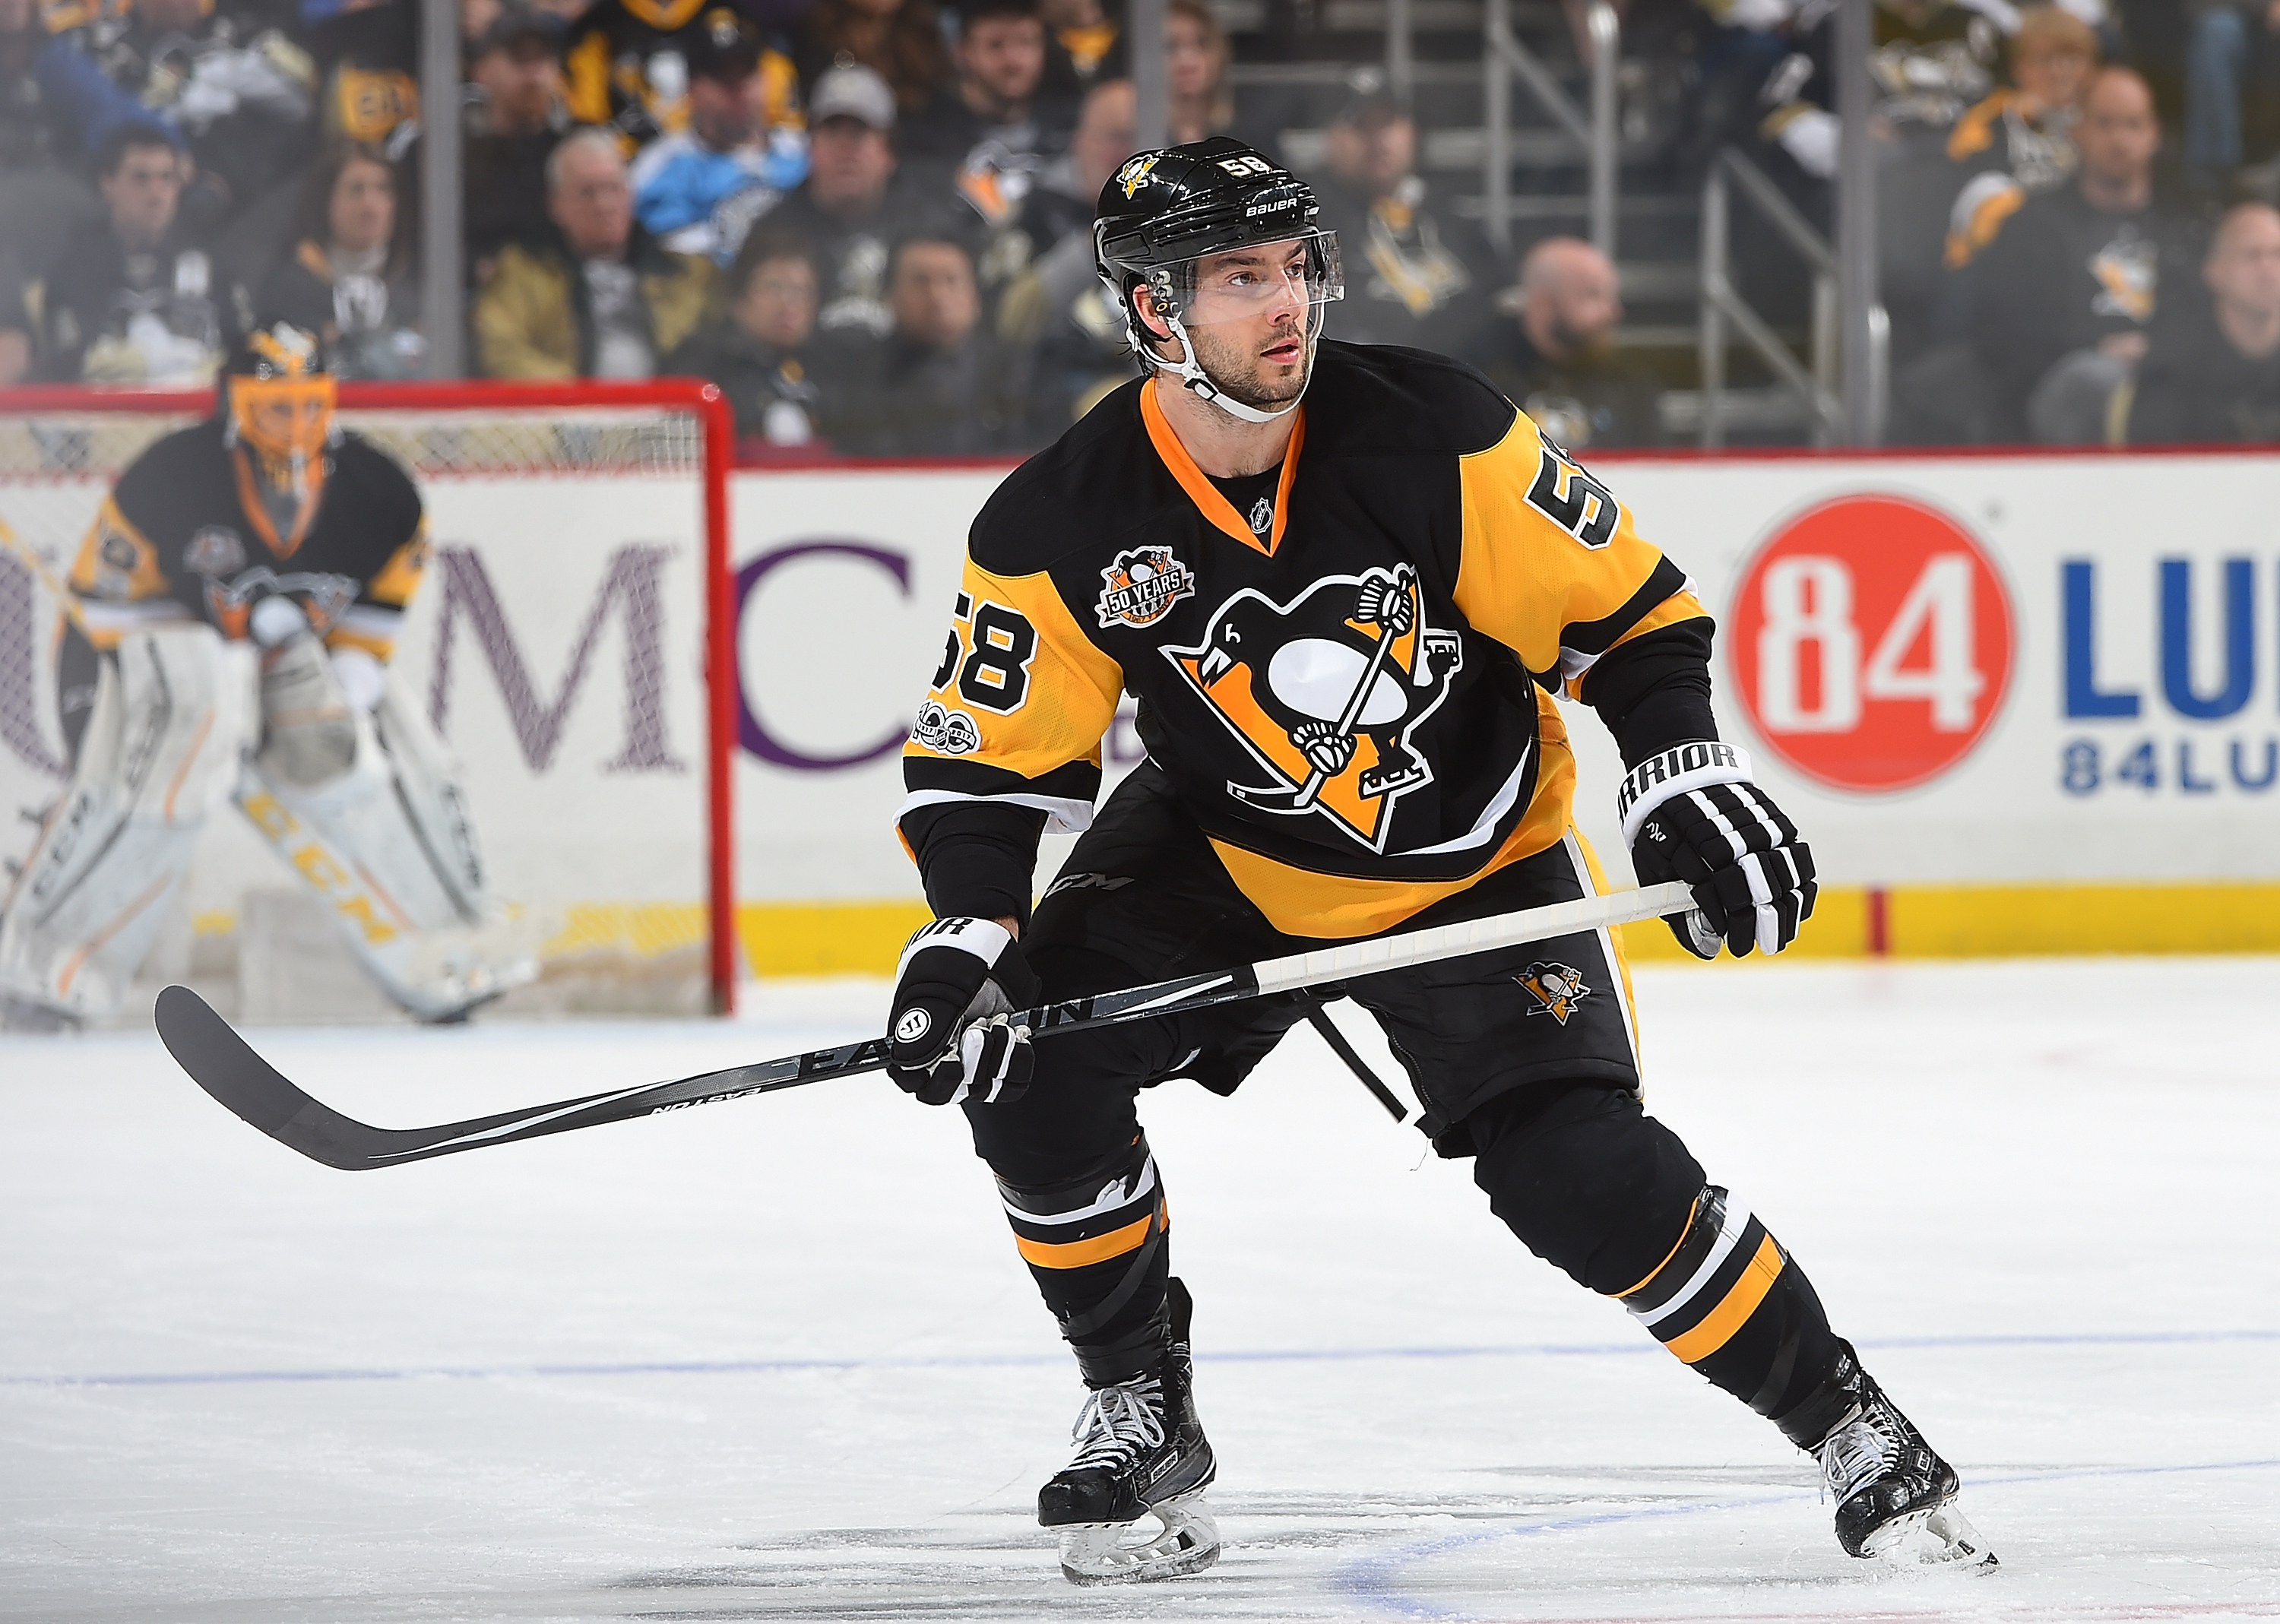 The '2008-09 Pittsburgh Penguins' quiz